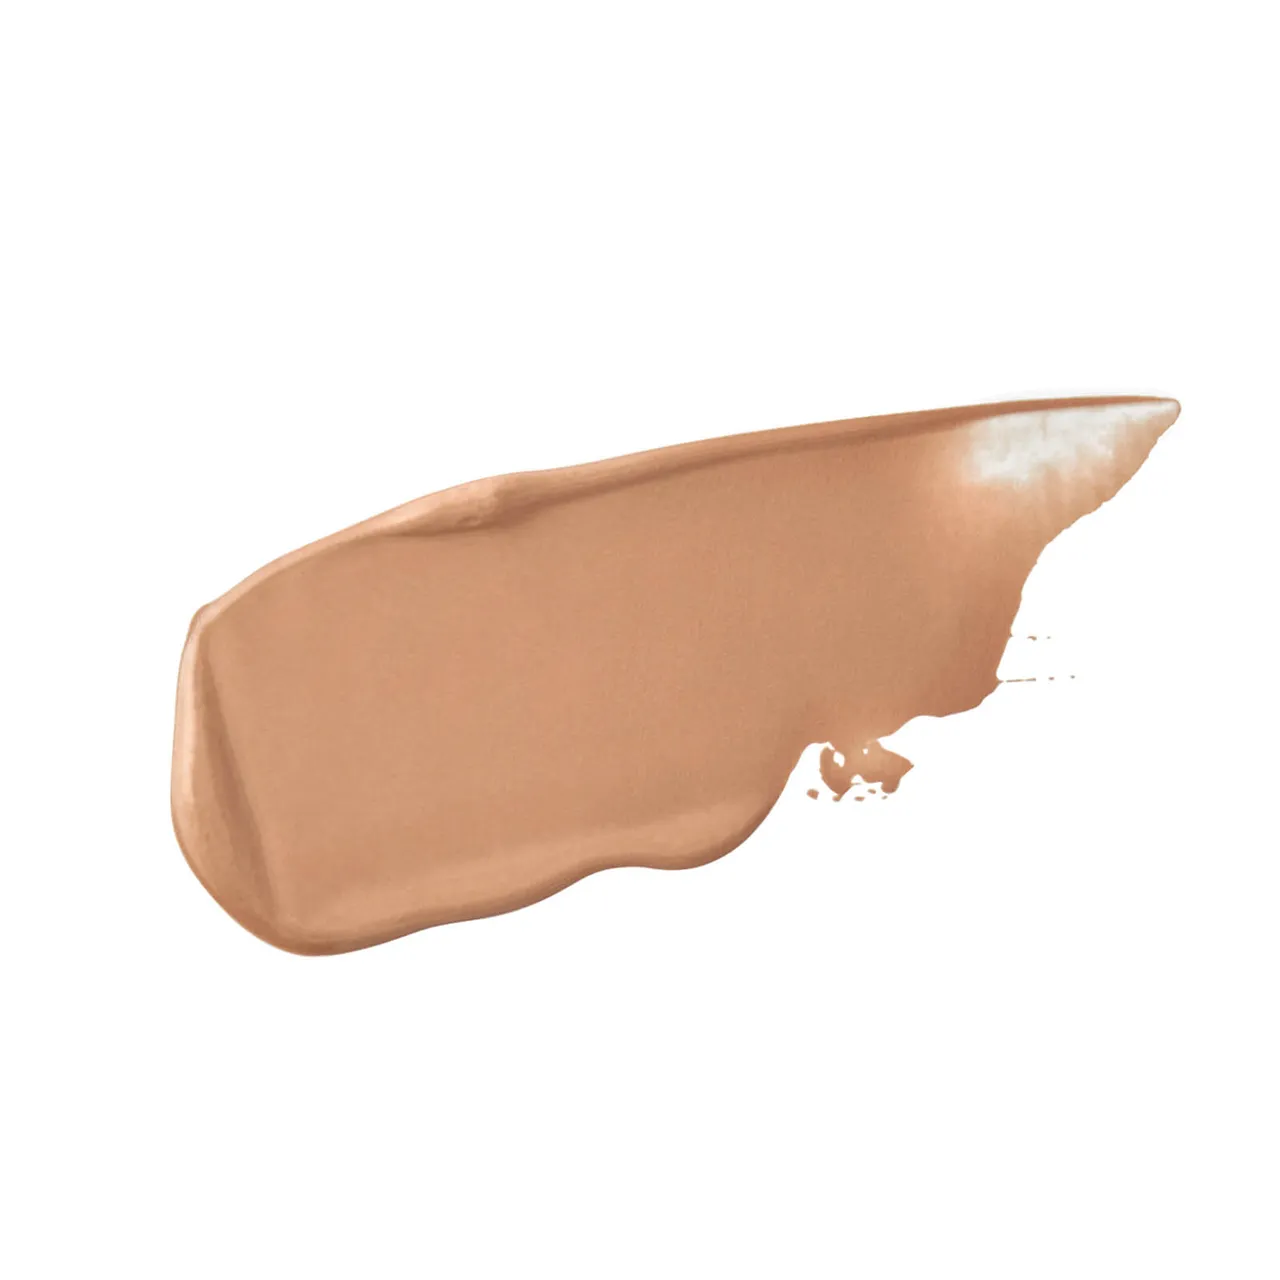 Laura Mercier Tinted Moisturiser Natural Skin Perfector SPF 20 50ml (Various Shades) - 3N1 Sand